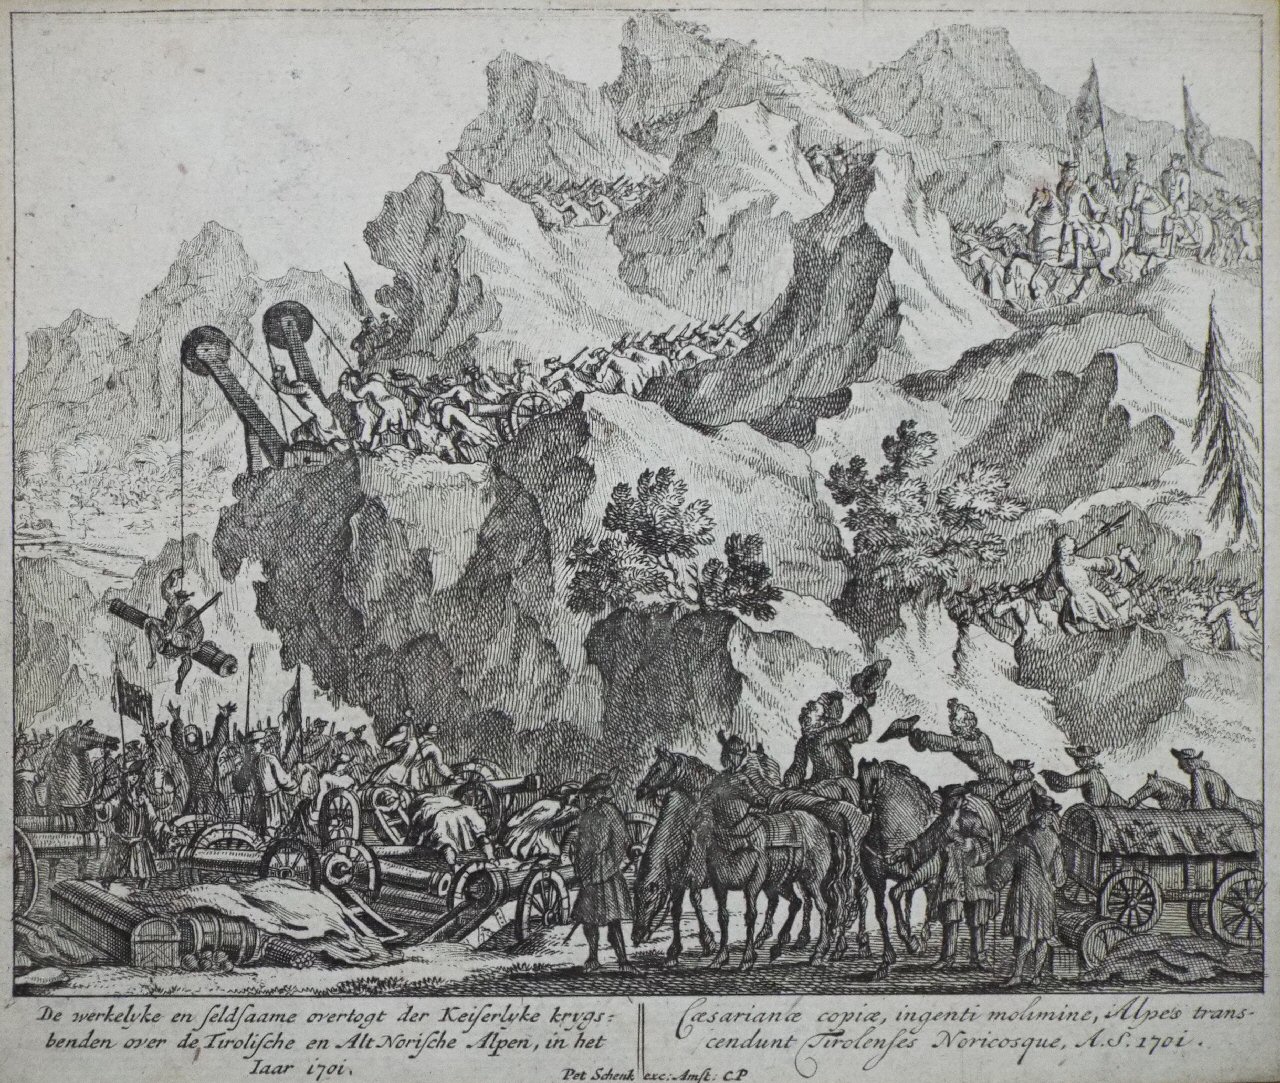 Etching - De werkelyke en feldsaame overtogt der Keiserlyke krygs... 1701